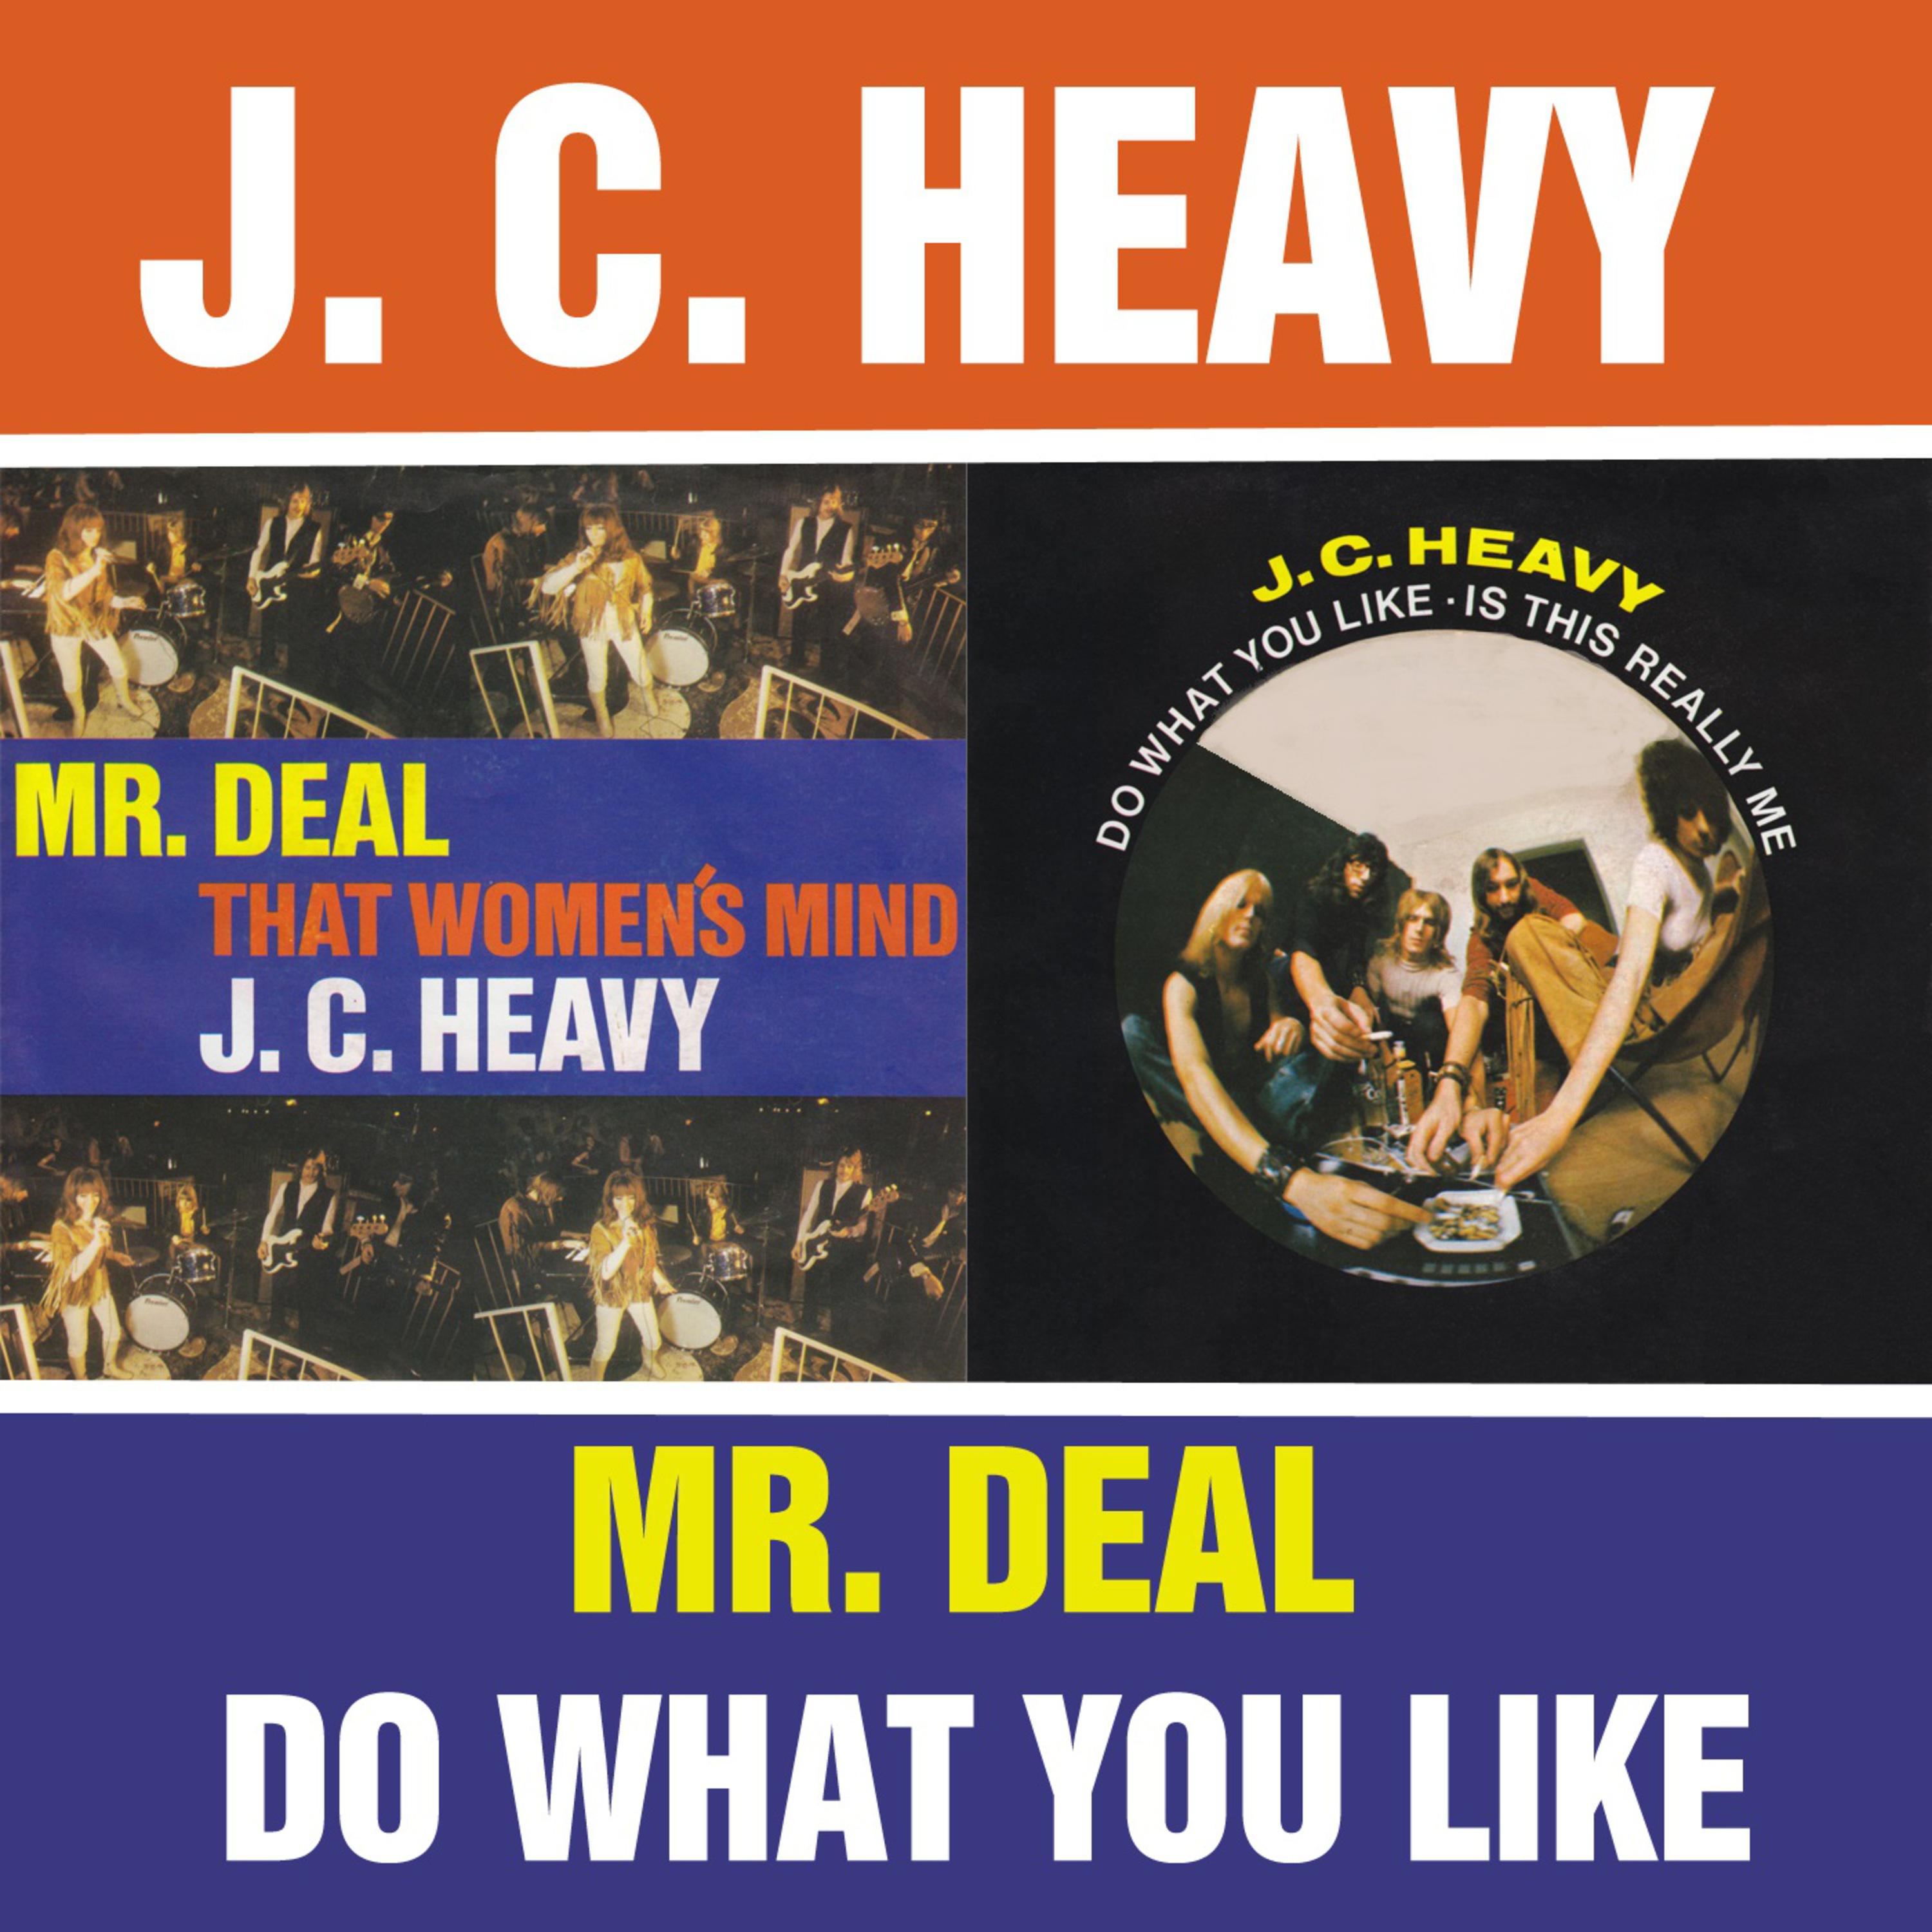 J.C. Heavy - That Woman's Mind